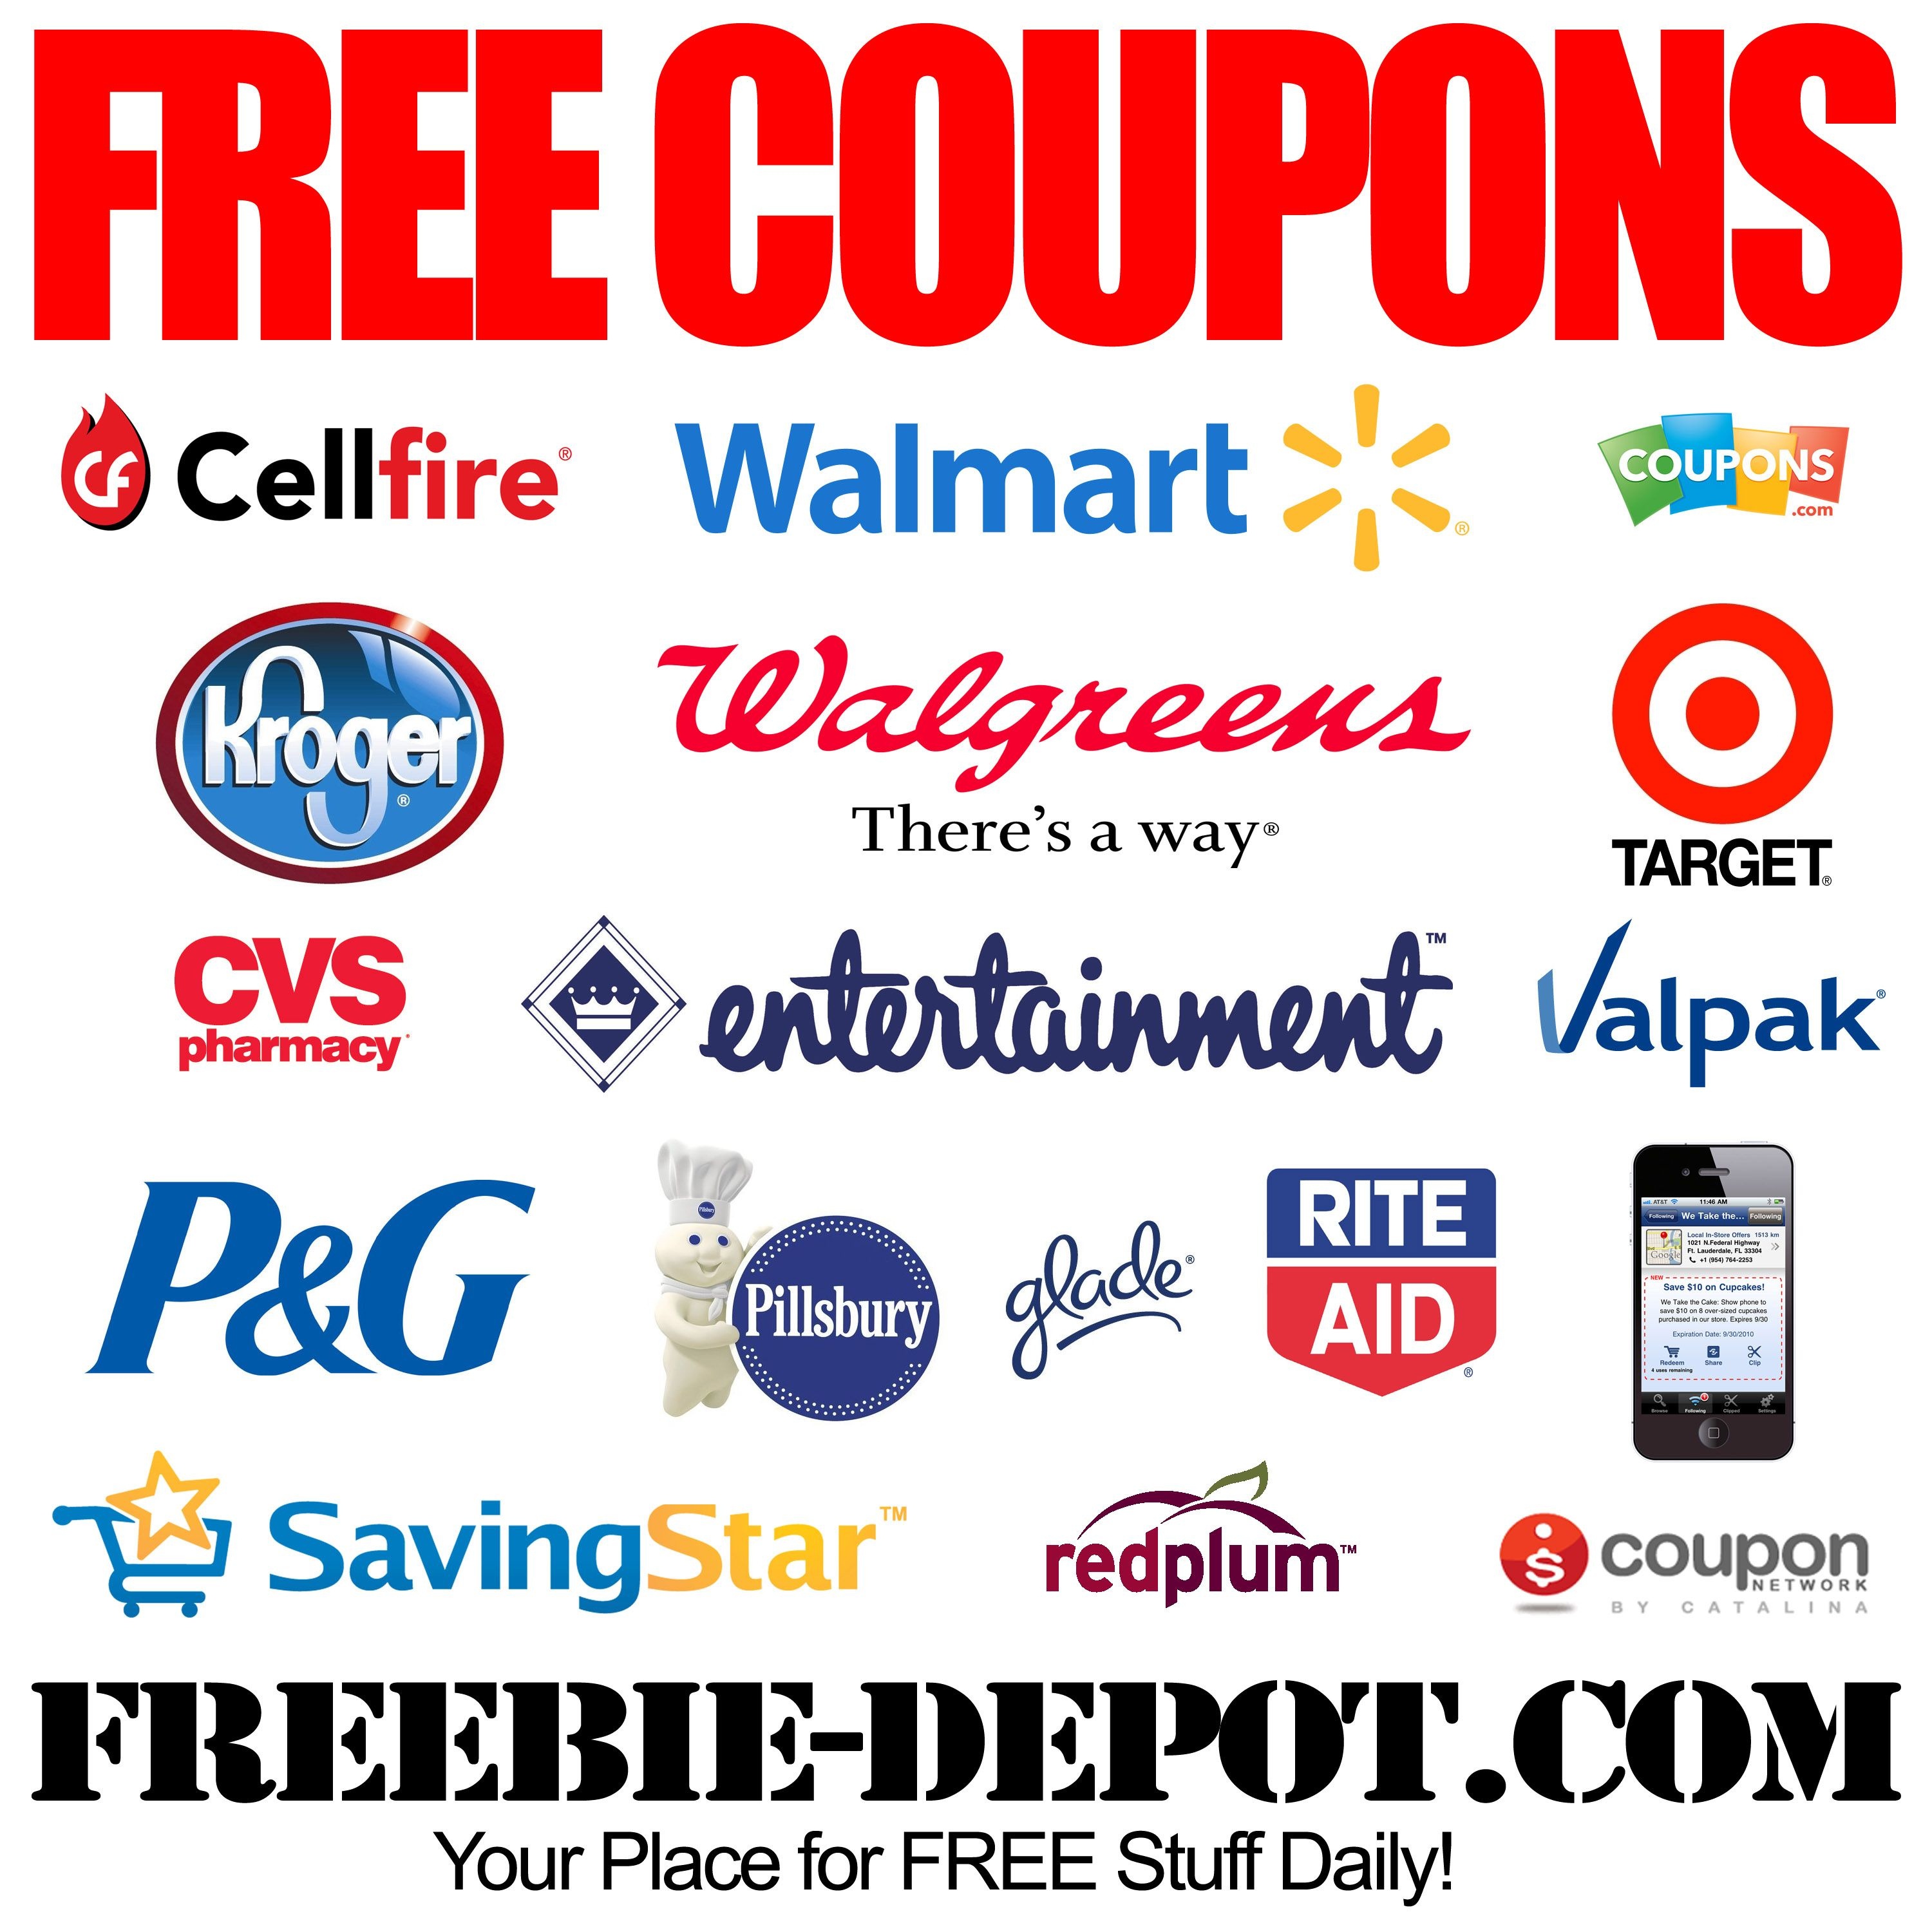 Free Coupons - Free Printable Coupons - Free Grocery Coupons - Free Printable Coupons For Food